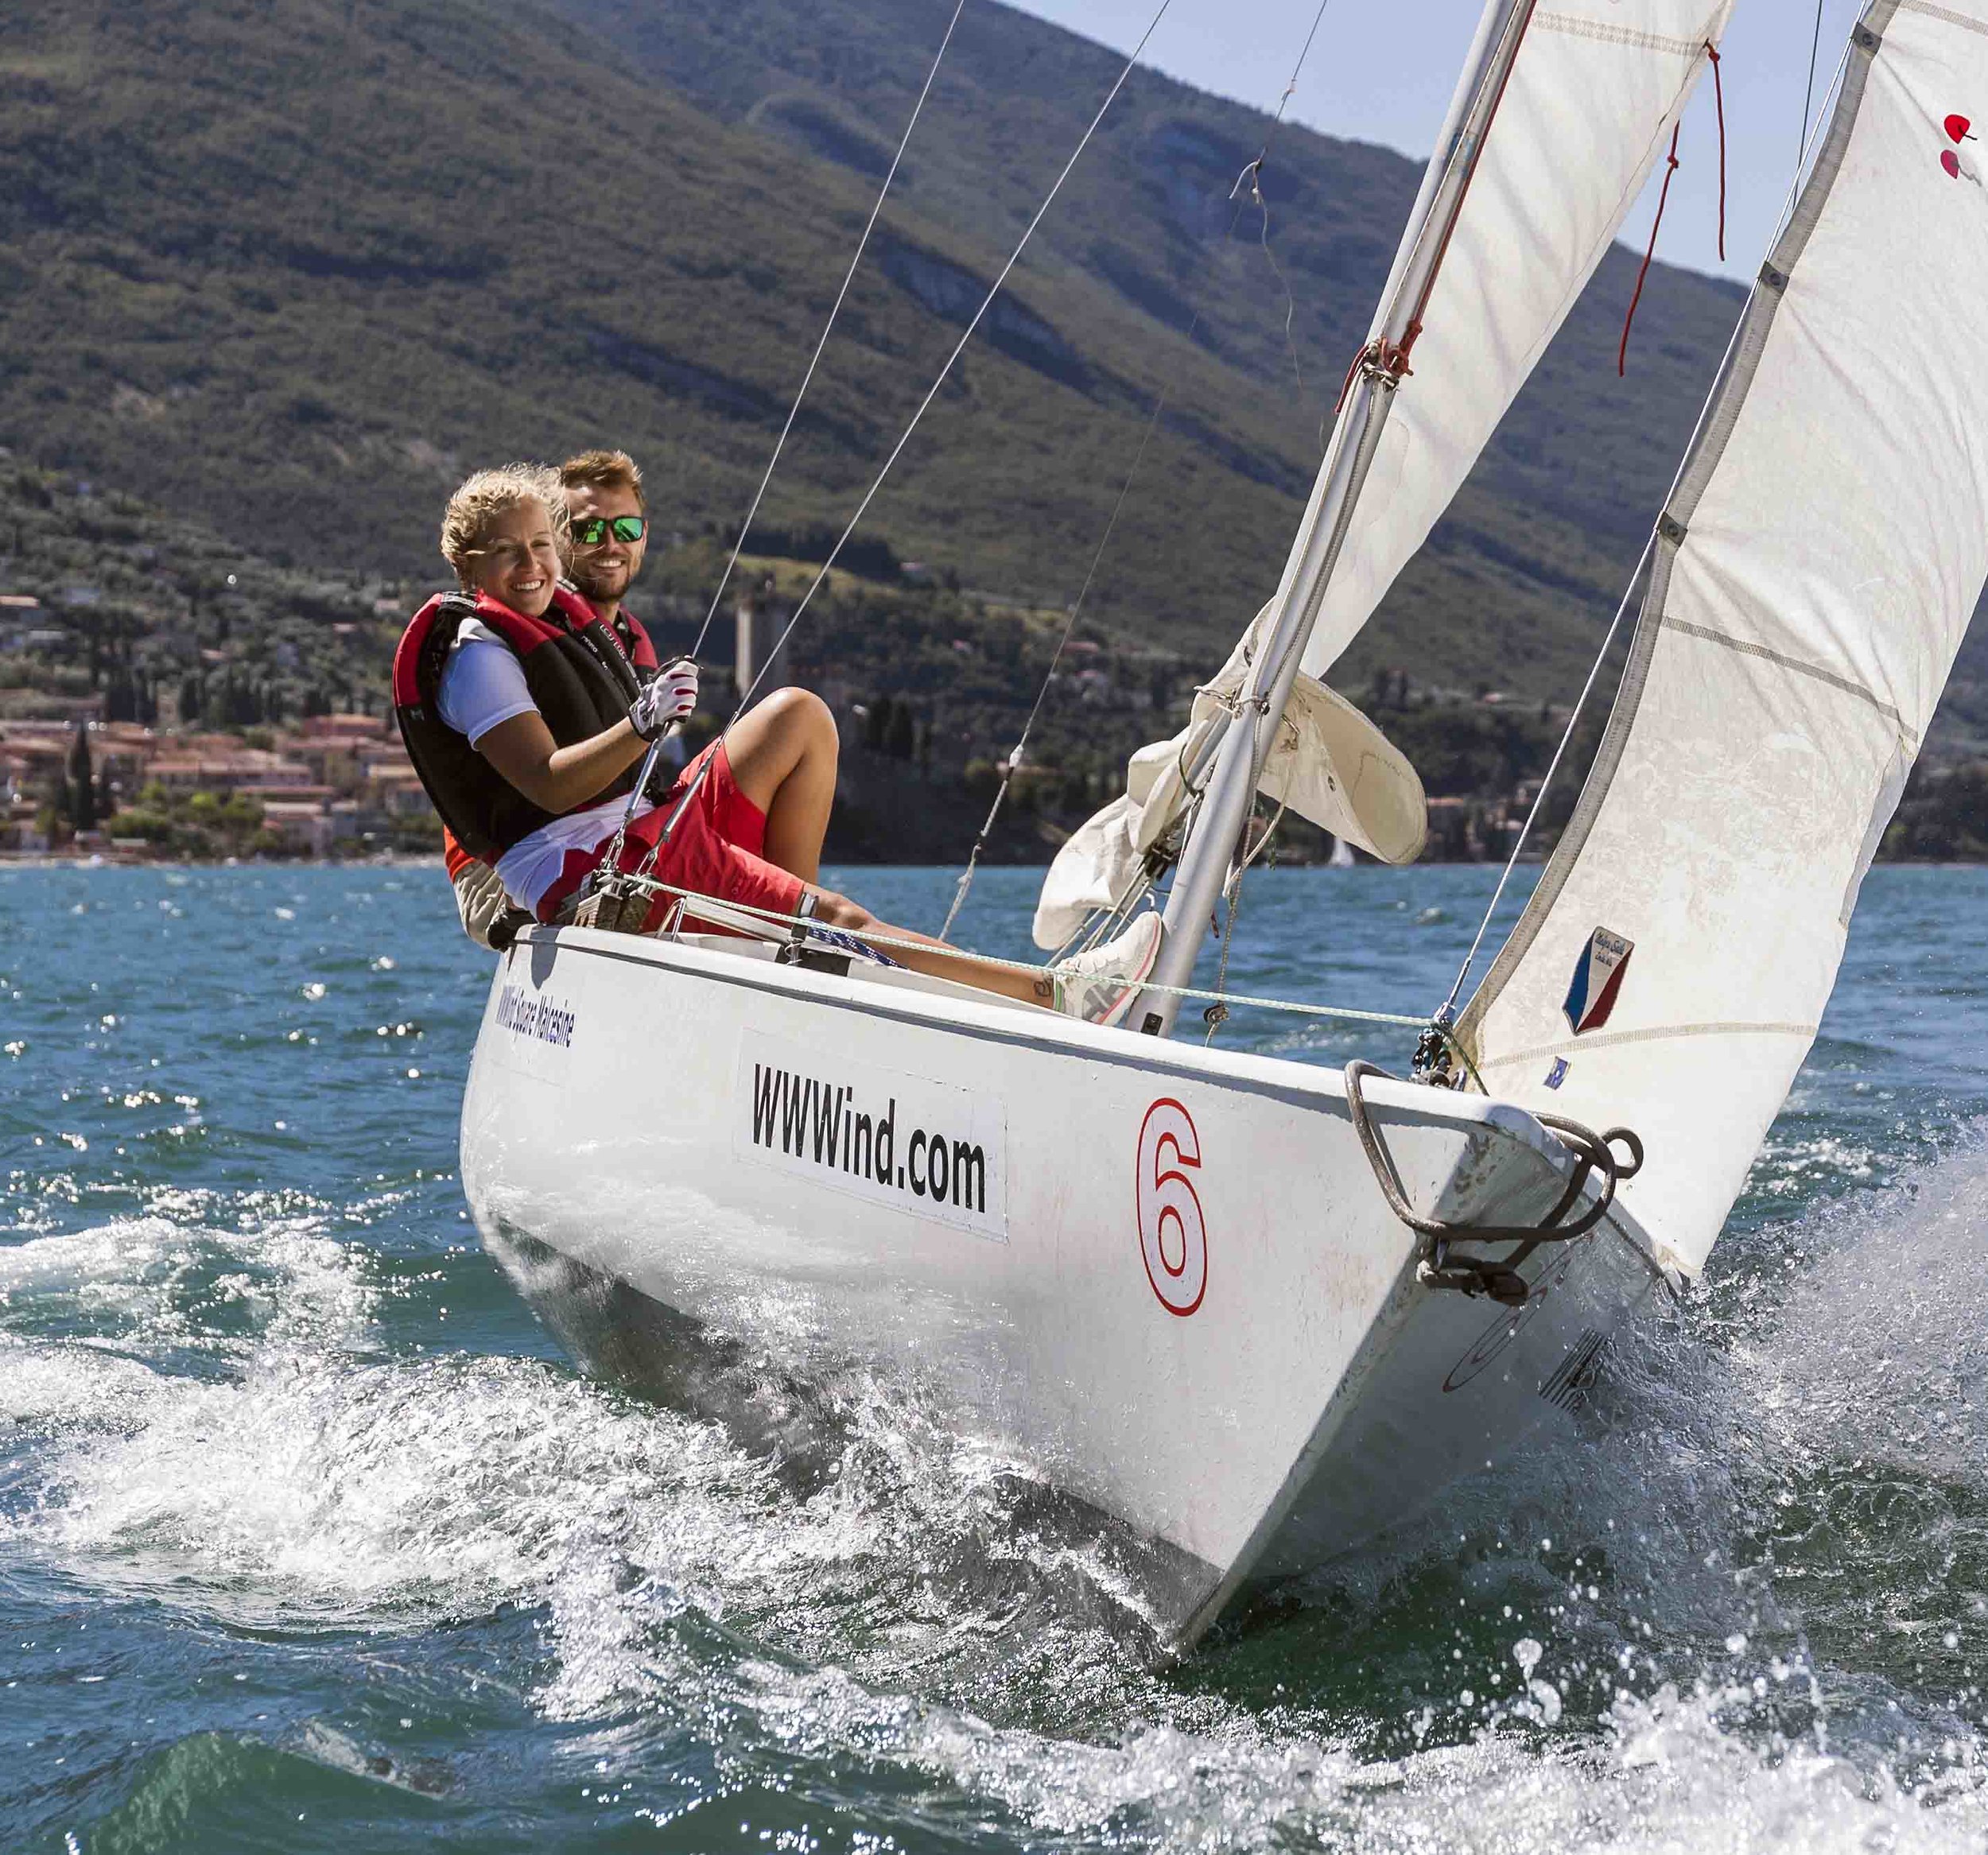 Sailing courses in Malcesine at Lake Garda — Wwwind Square Malcesine